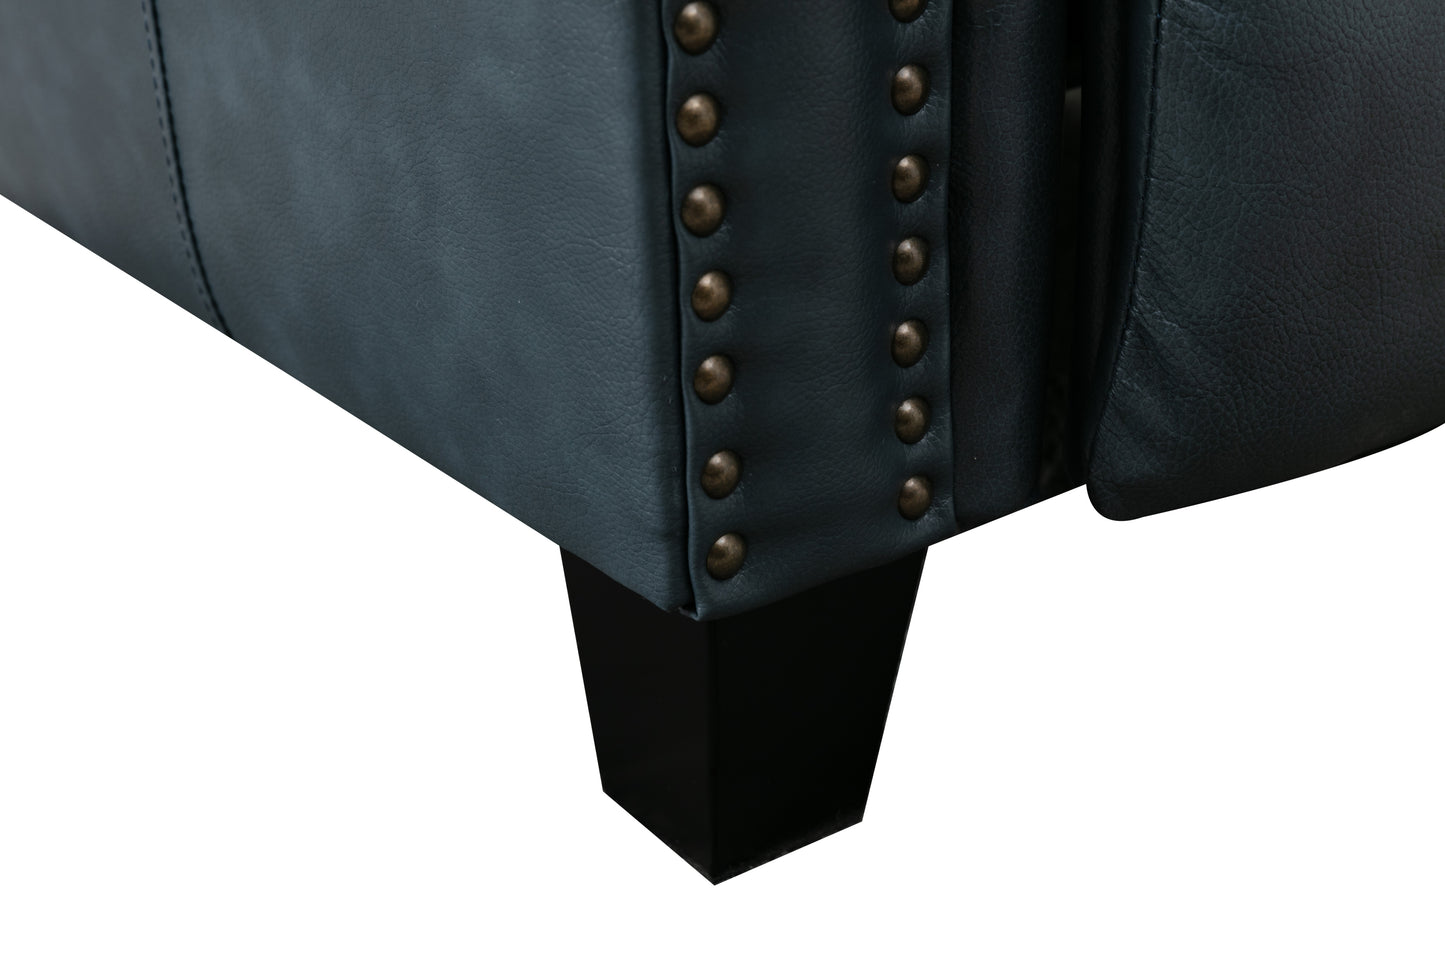 33.5inch Wide Genuine Leather Manual Ergonomic Recliner